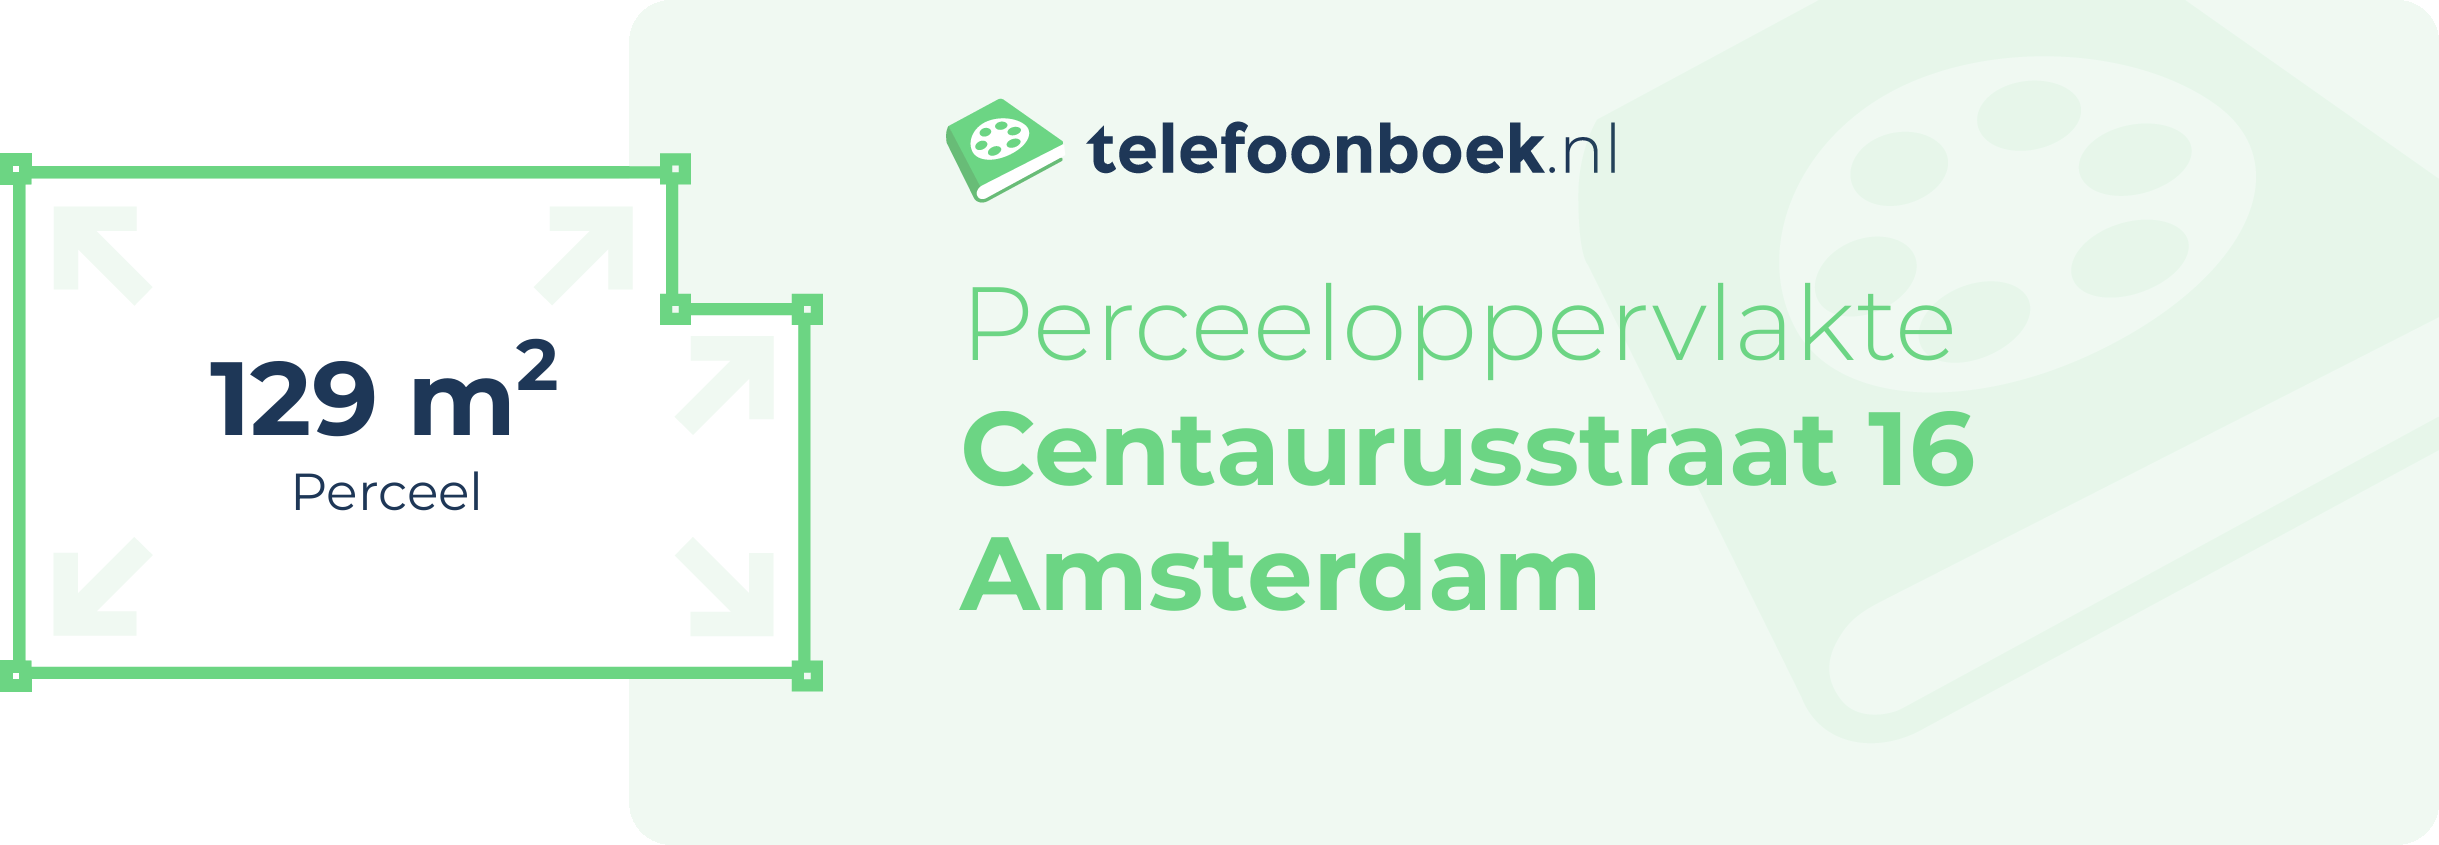 Perceeloppervlakte Centaurusstraat 16 Amsterdam